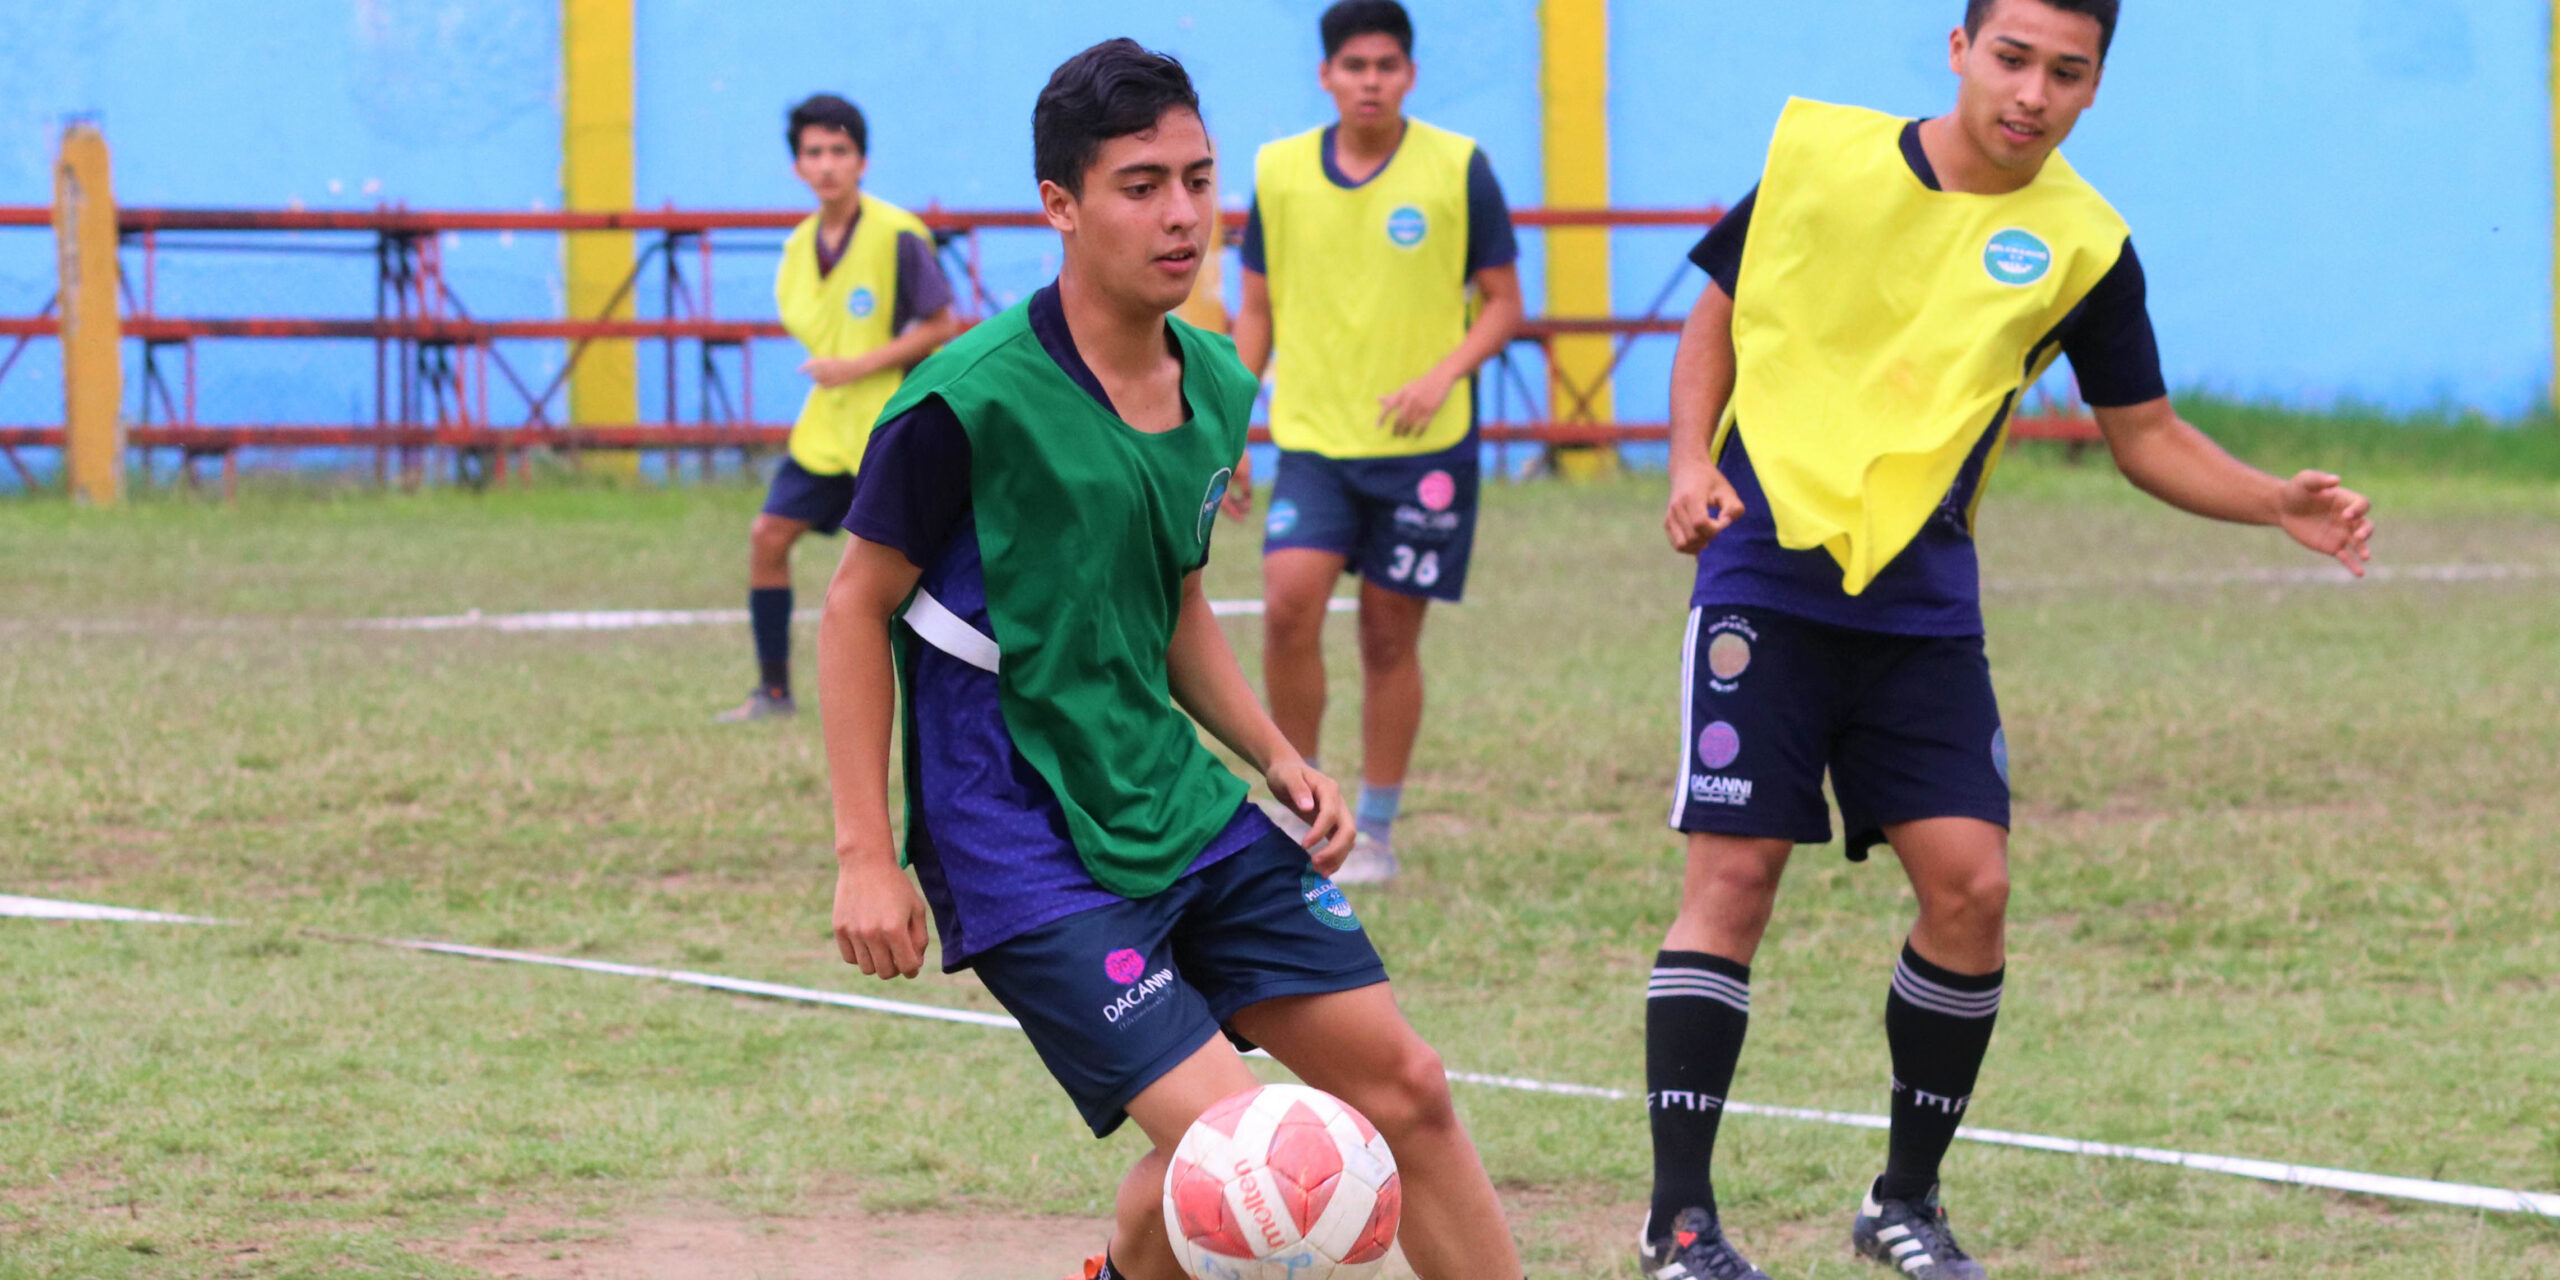 Regresa el futbol al Carrasquedo | El Imparcial de Oaxaca